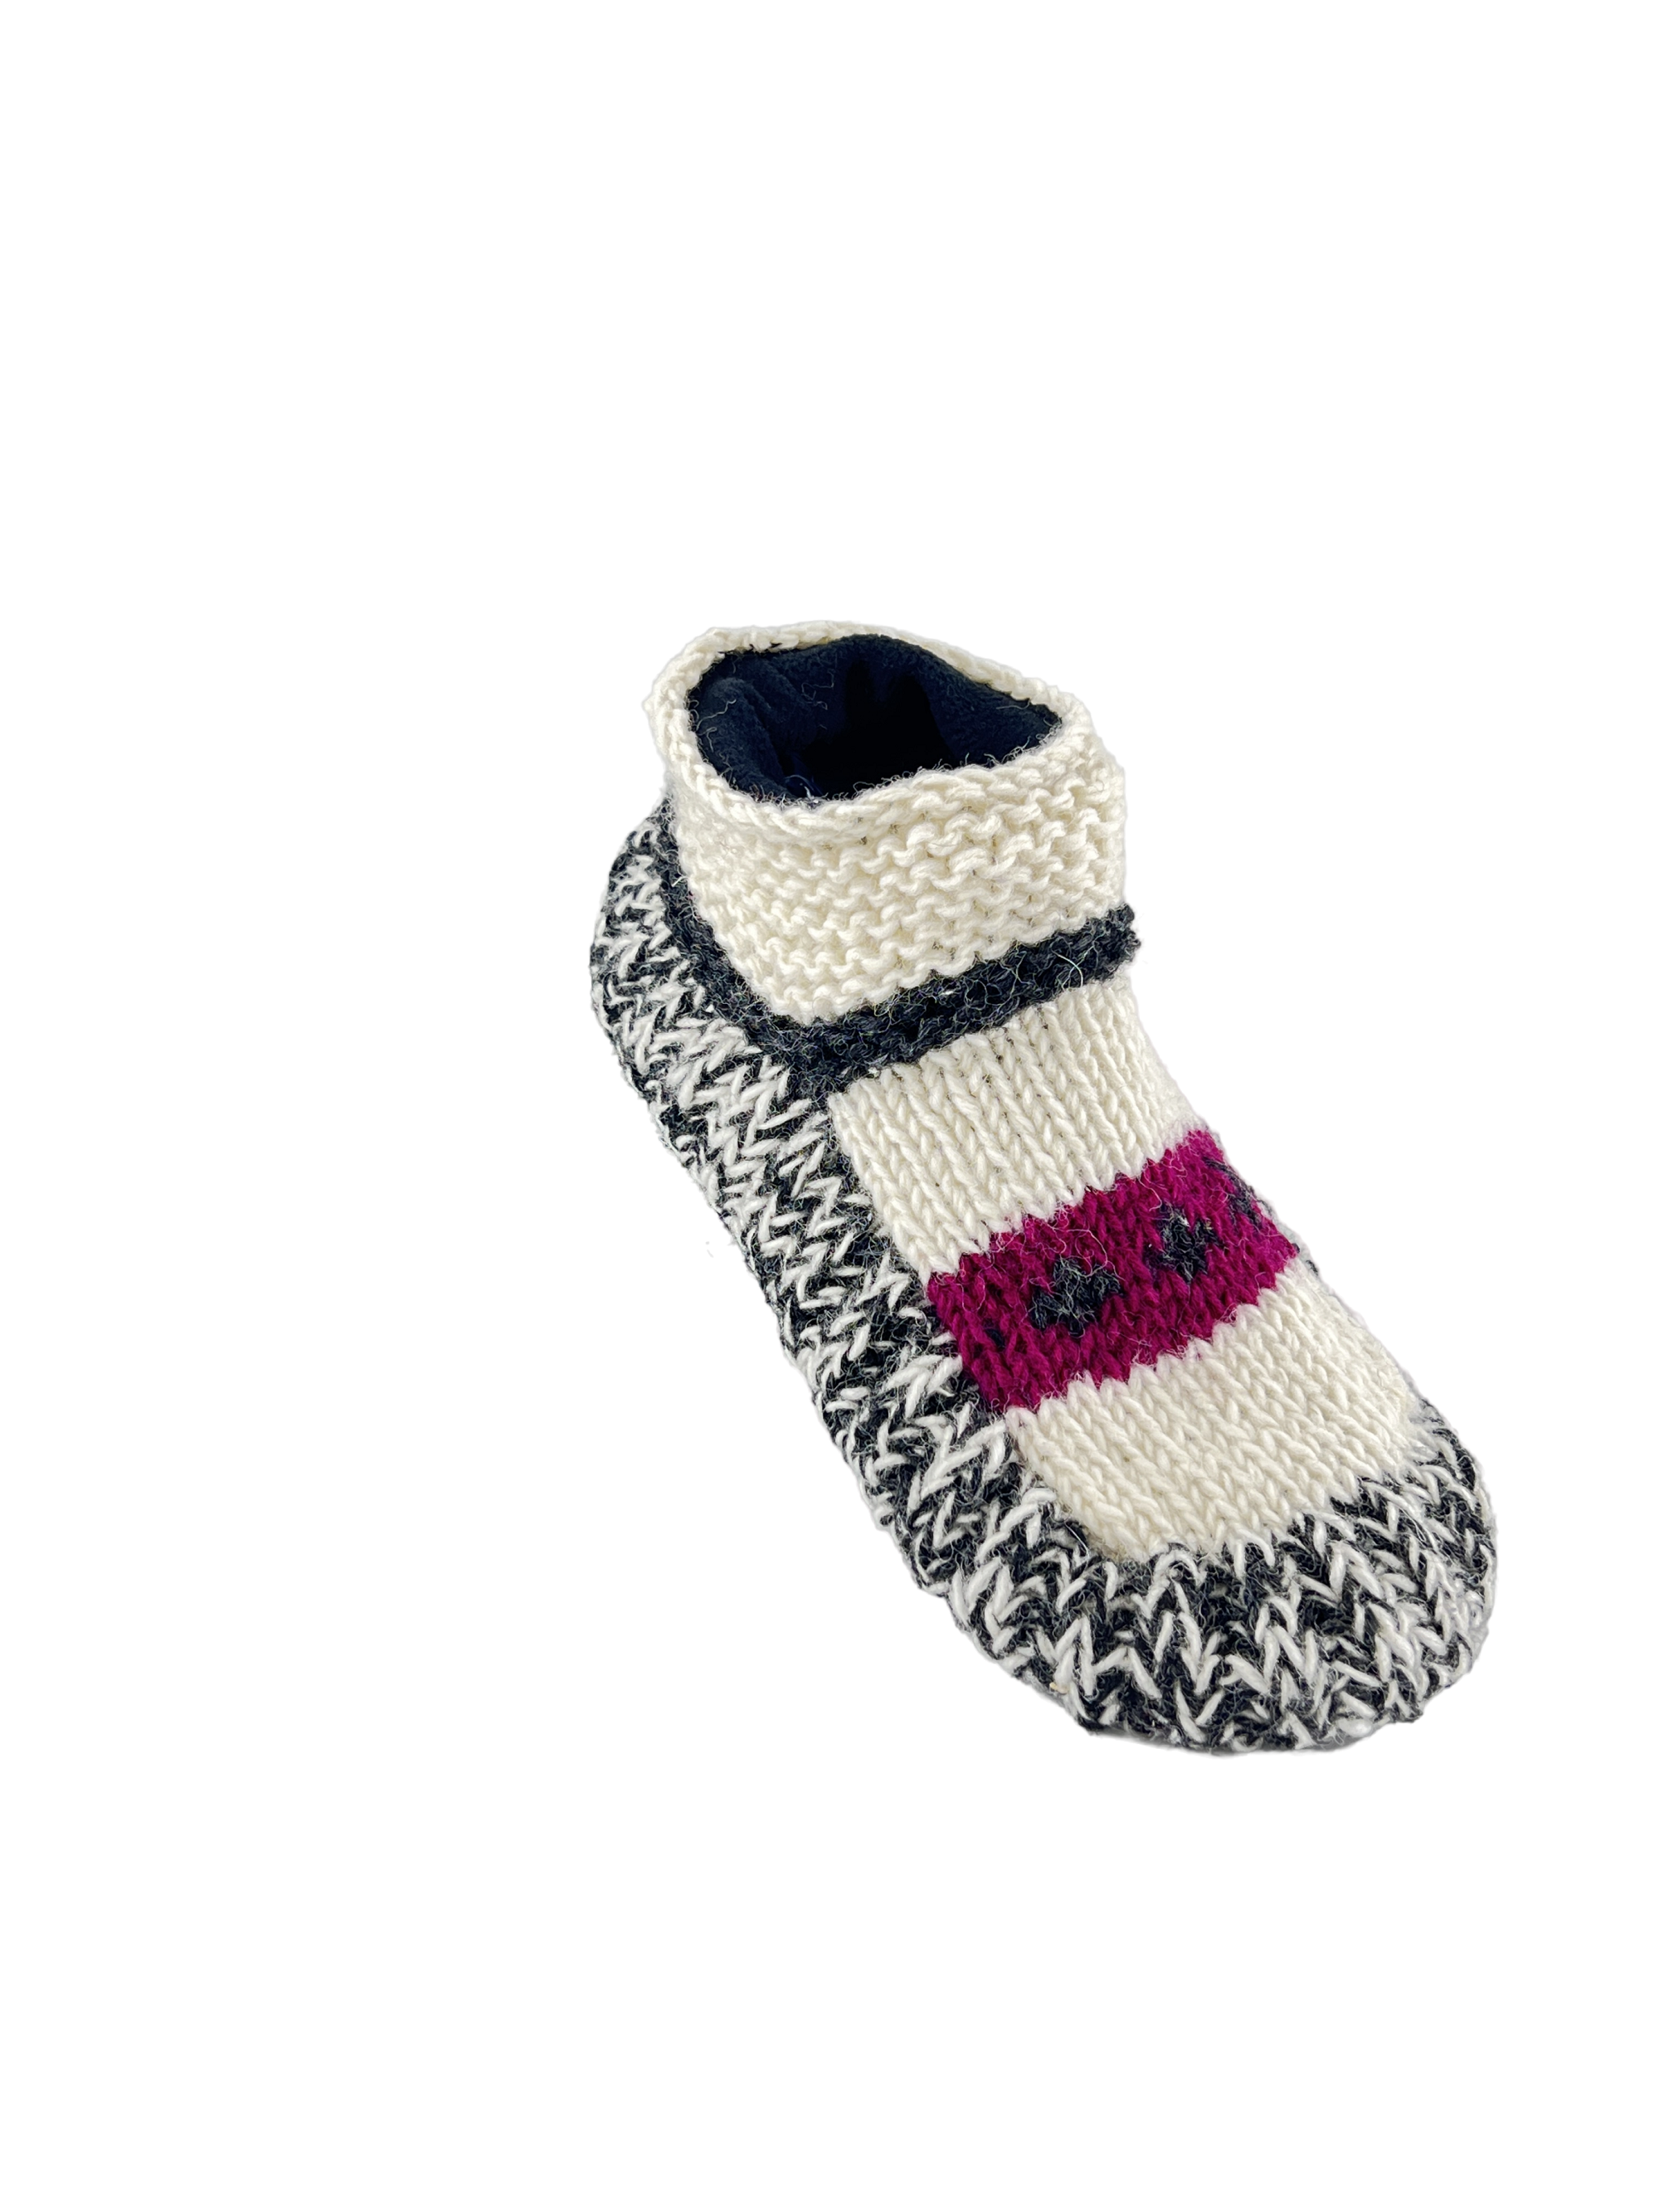 Fleece Lined boots |Women’s Non-Slip Hand Knitted Woolen Slippers Socks | Pure Yak Wool Hand Knitted Socks | Cozy House Wear Ankle Slippers